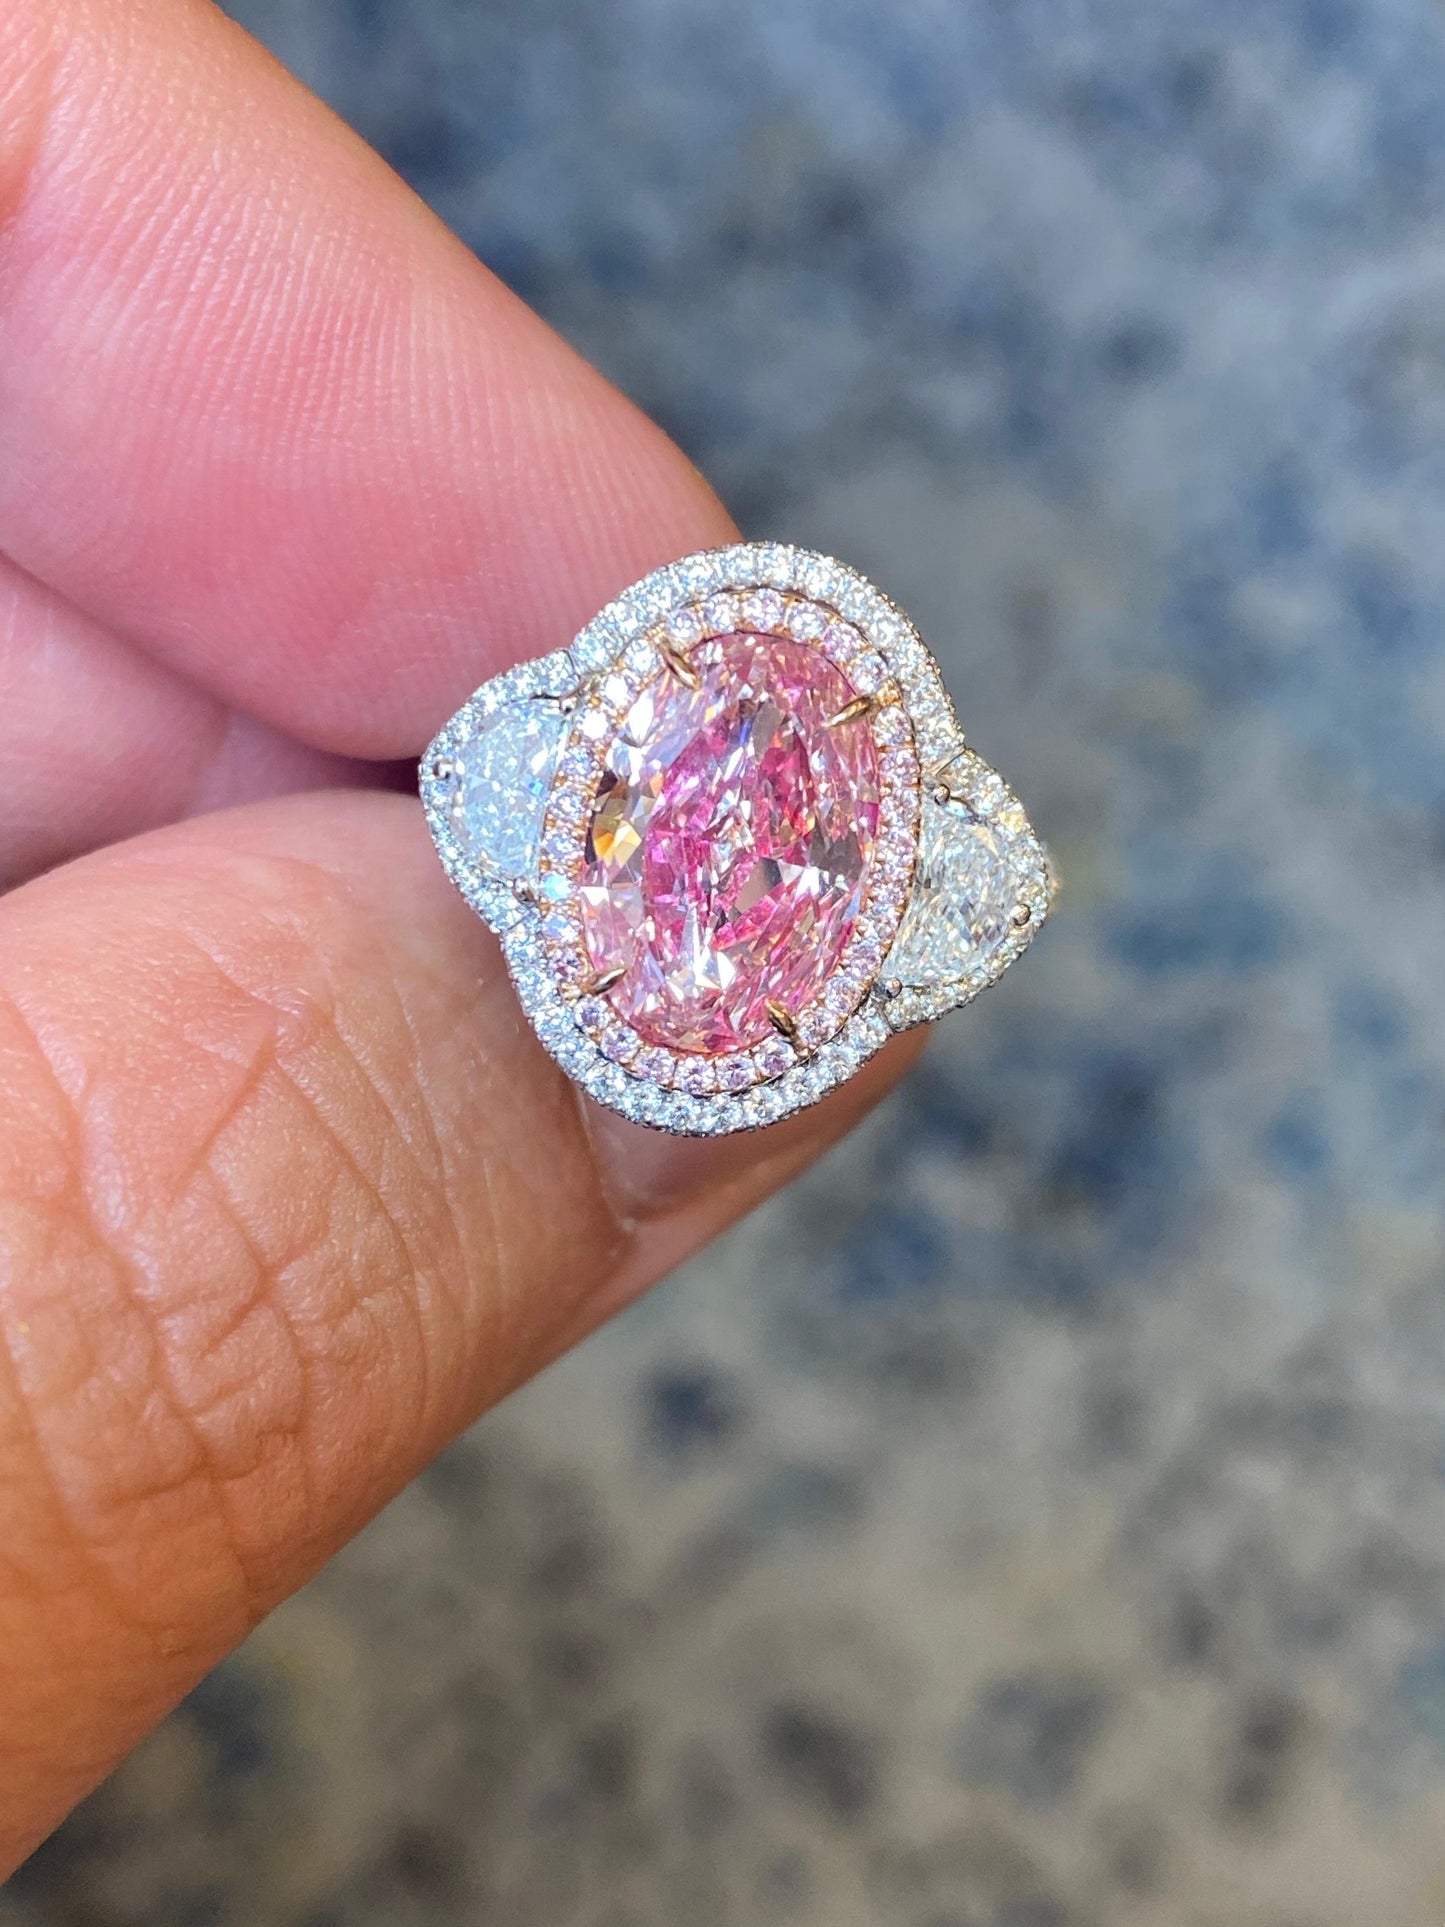 Emilio Jewelry Gia Certified 3.00 Carat Oval Pink Diamond Ring